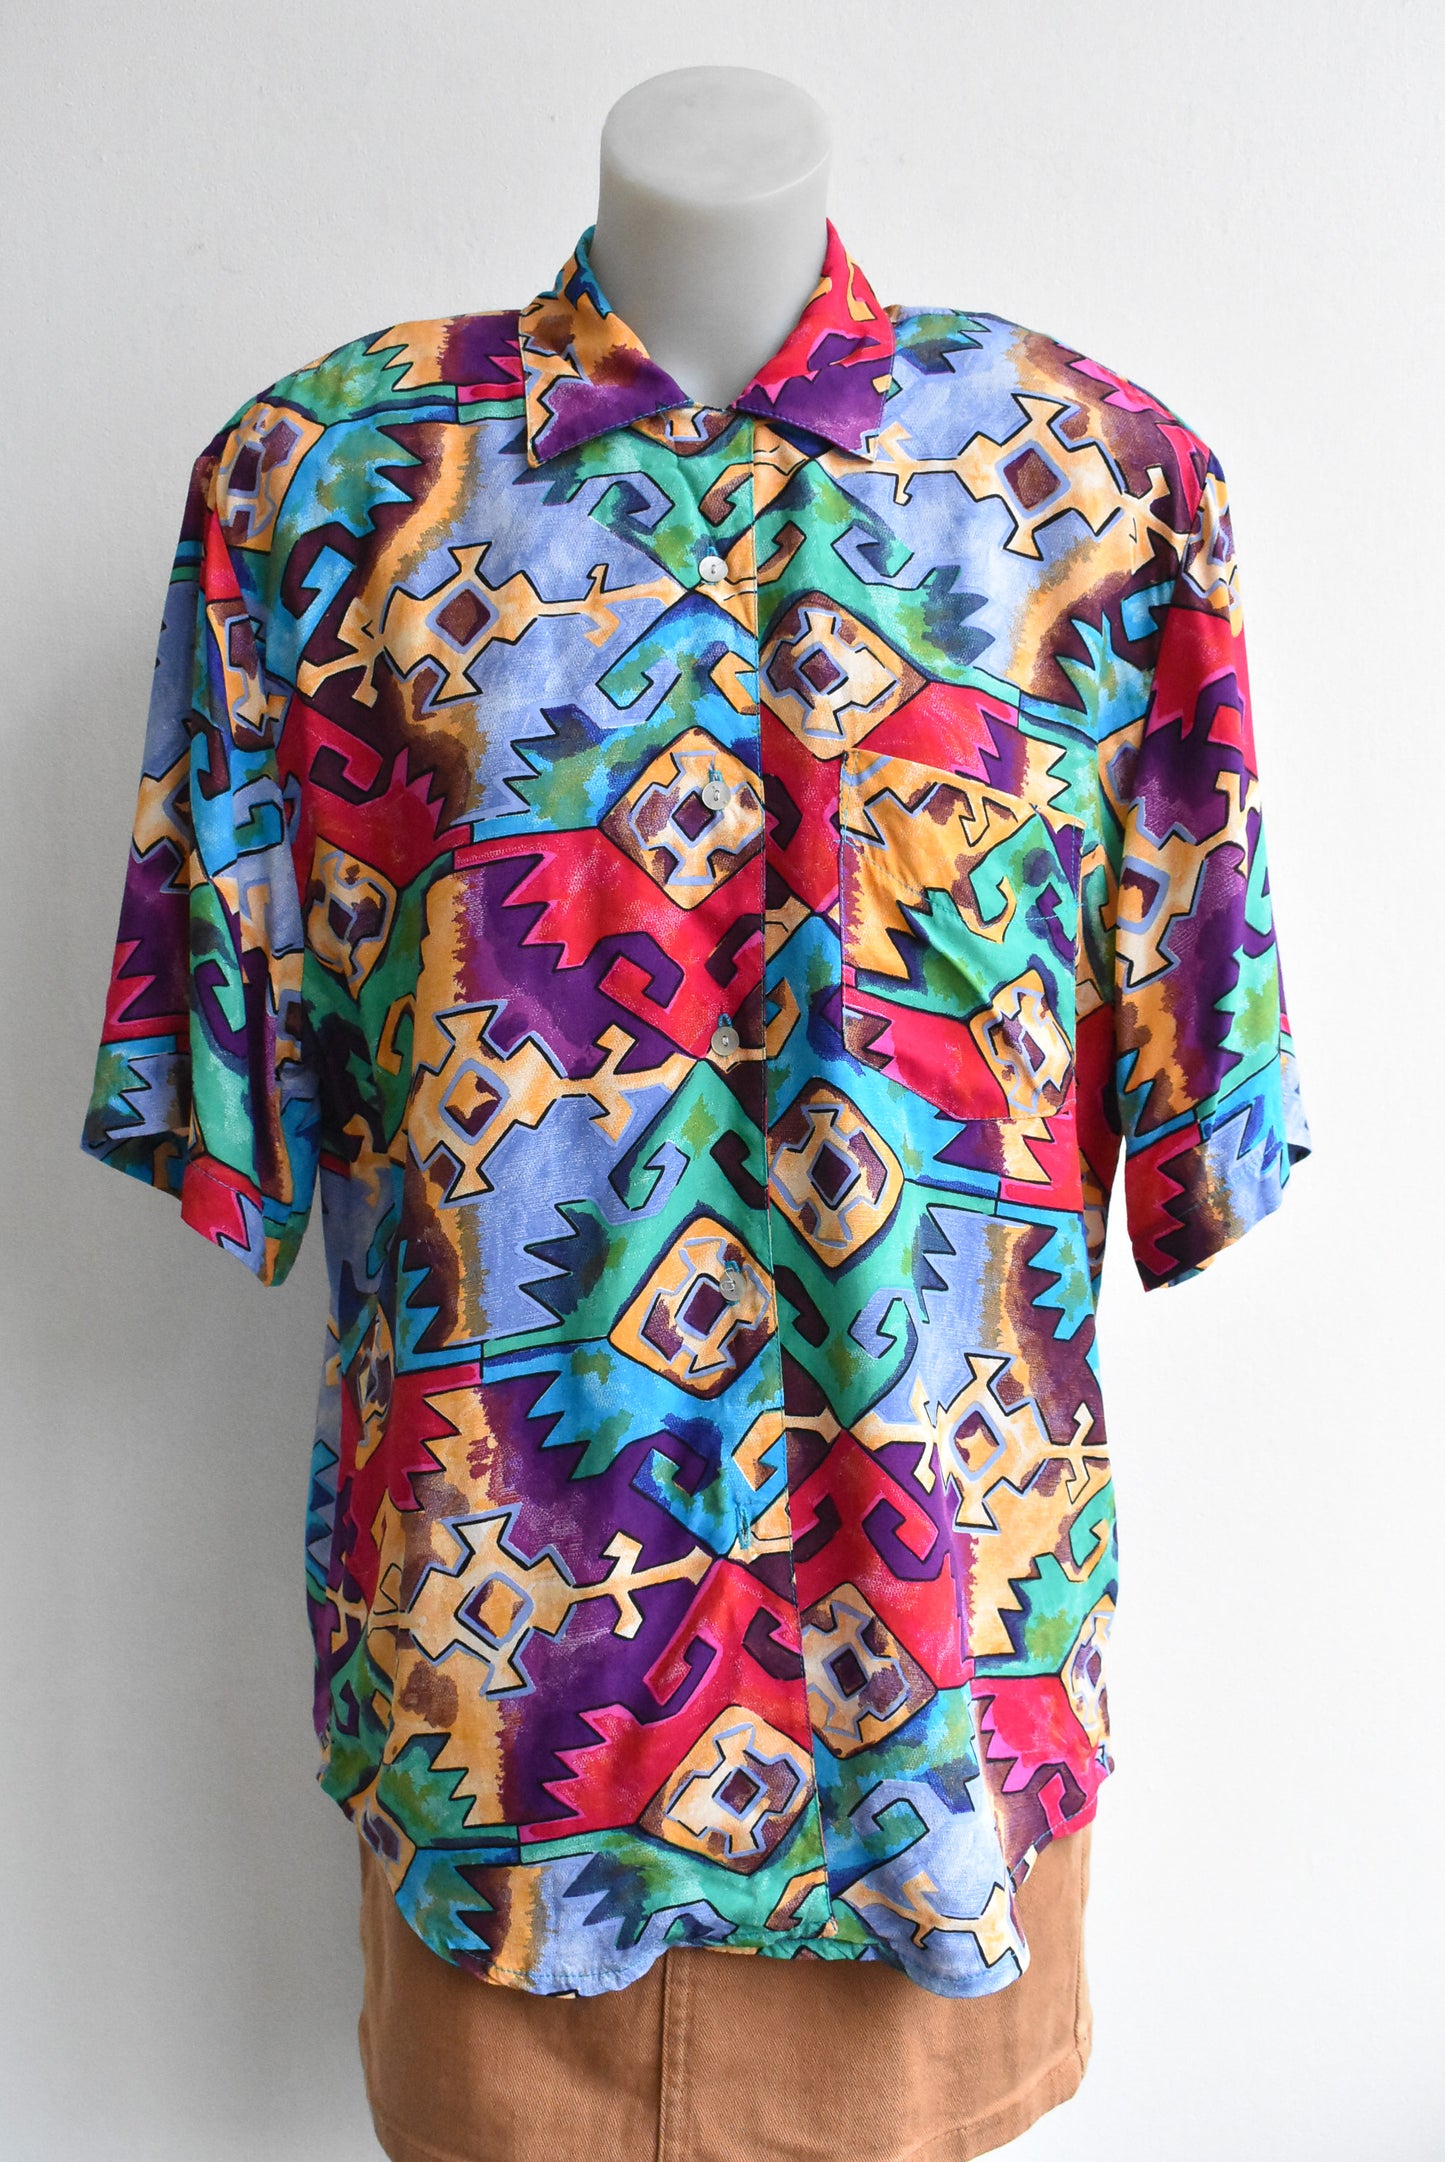 Cassa retro brightly patterned shirt, size 12